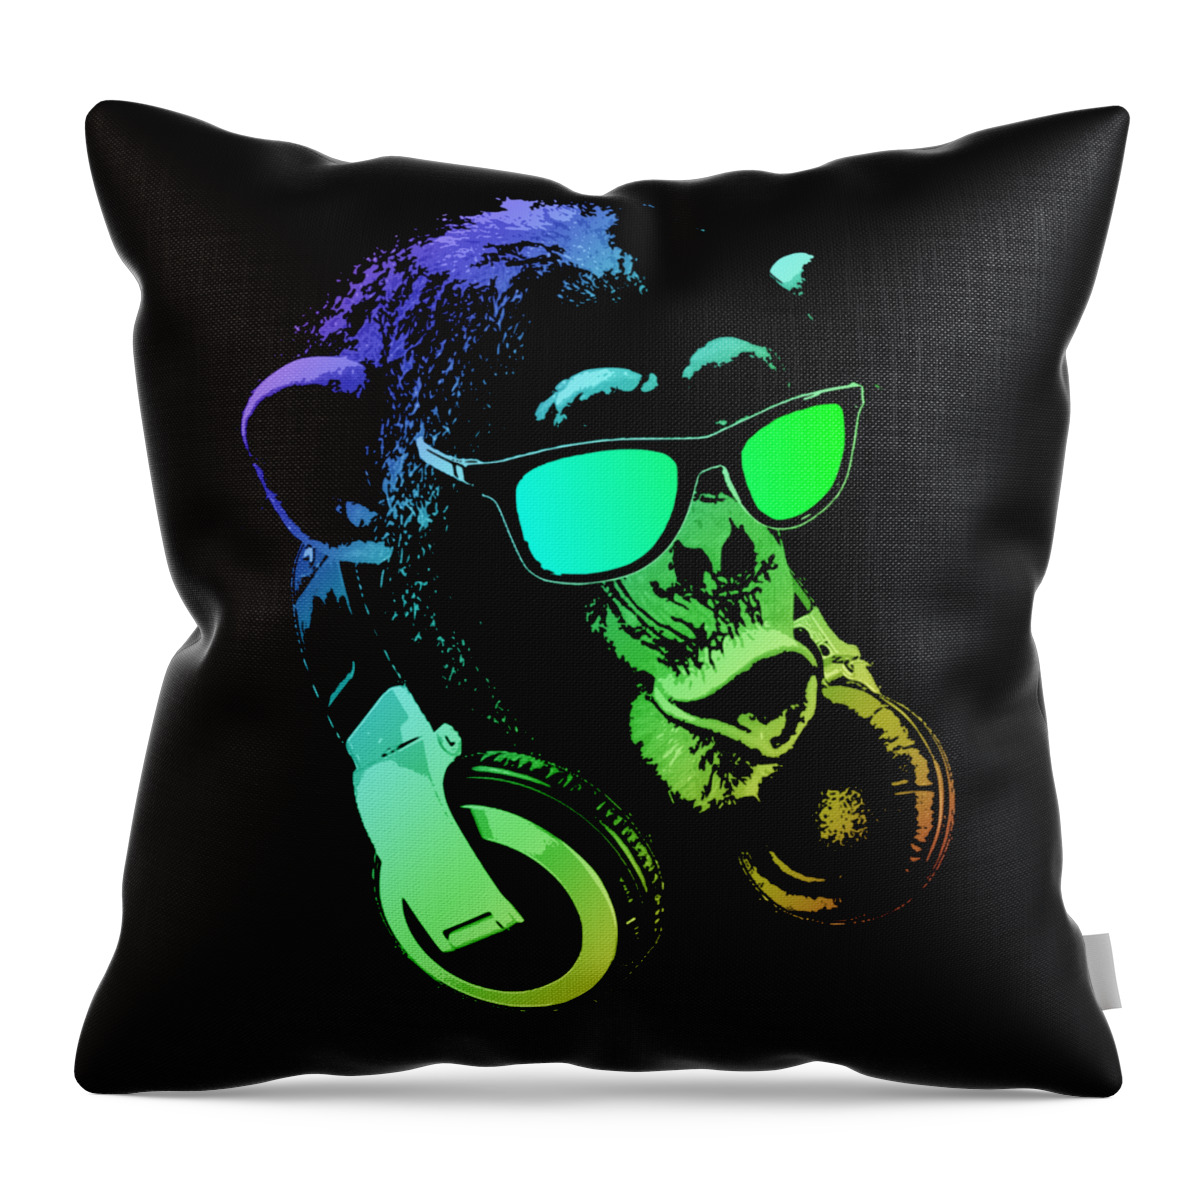 Monkey Throw Pillow featuring the mixed media Monkey DJ Neon Light by Filip Schpindel